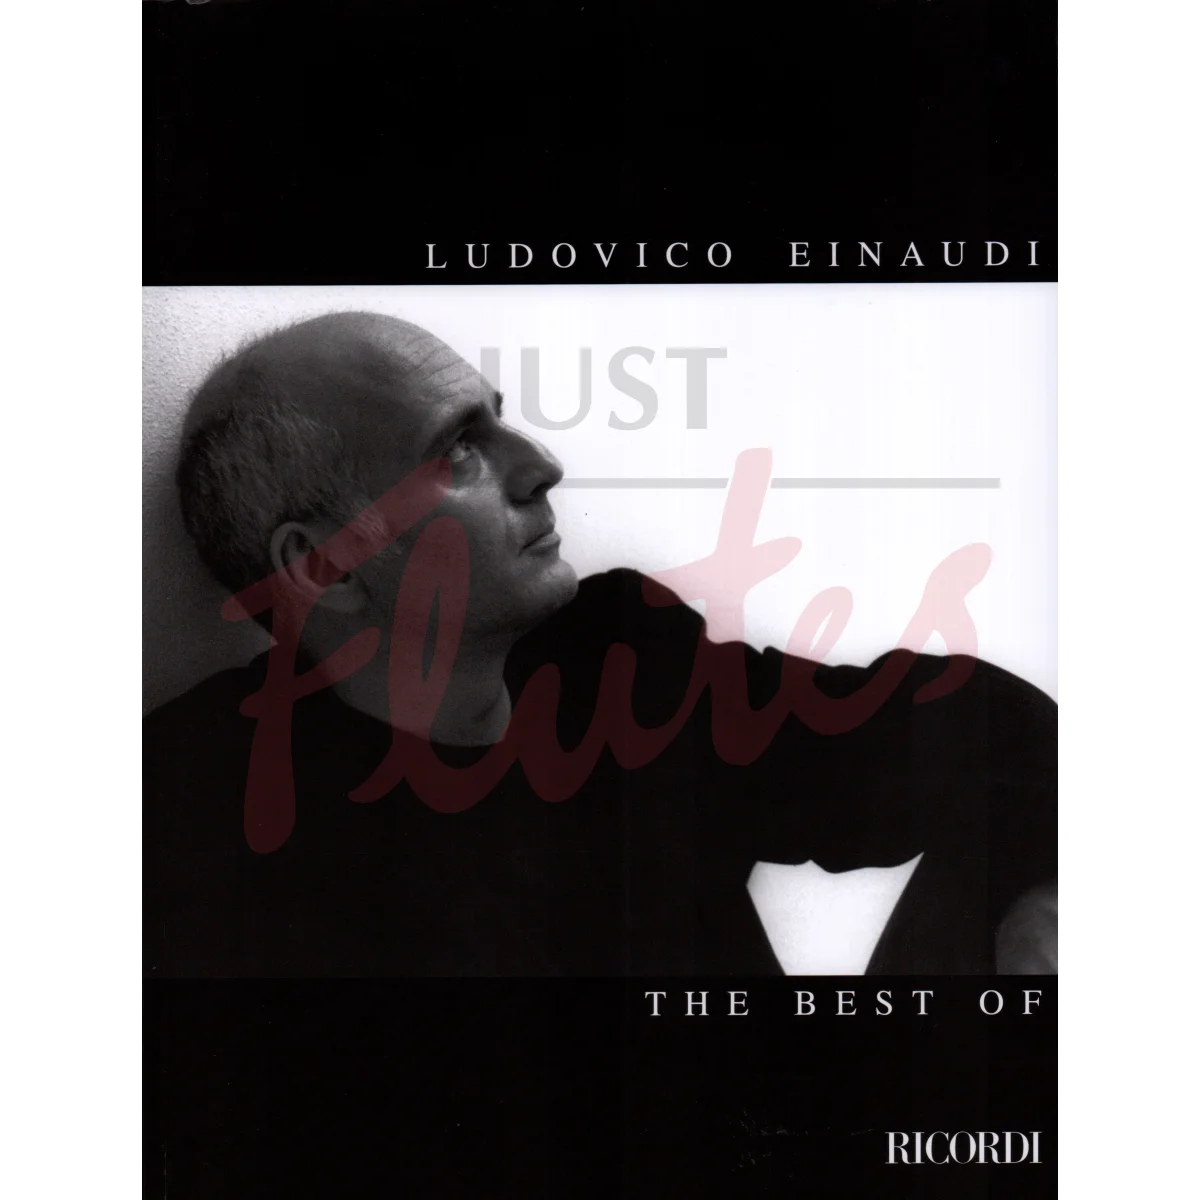 The Best of Ludovico Einaudi